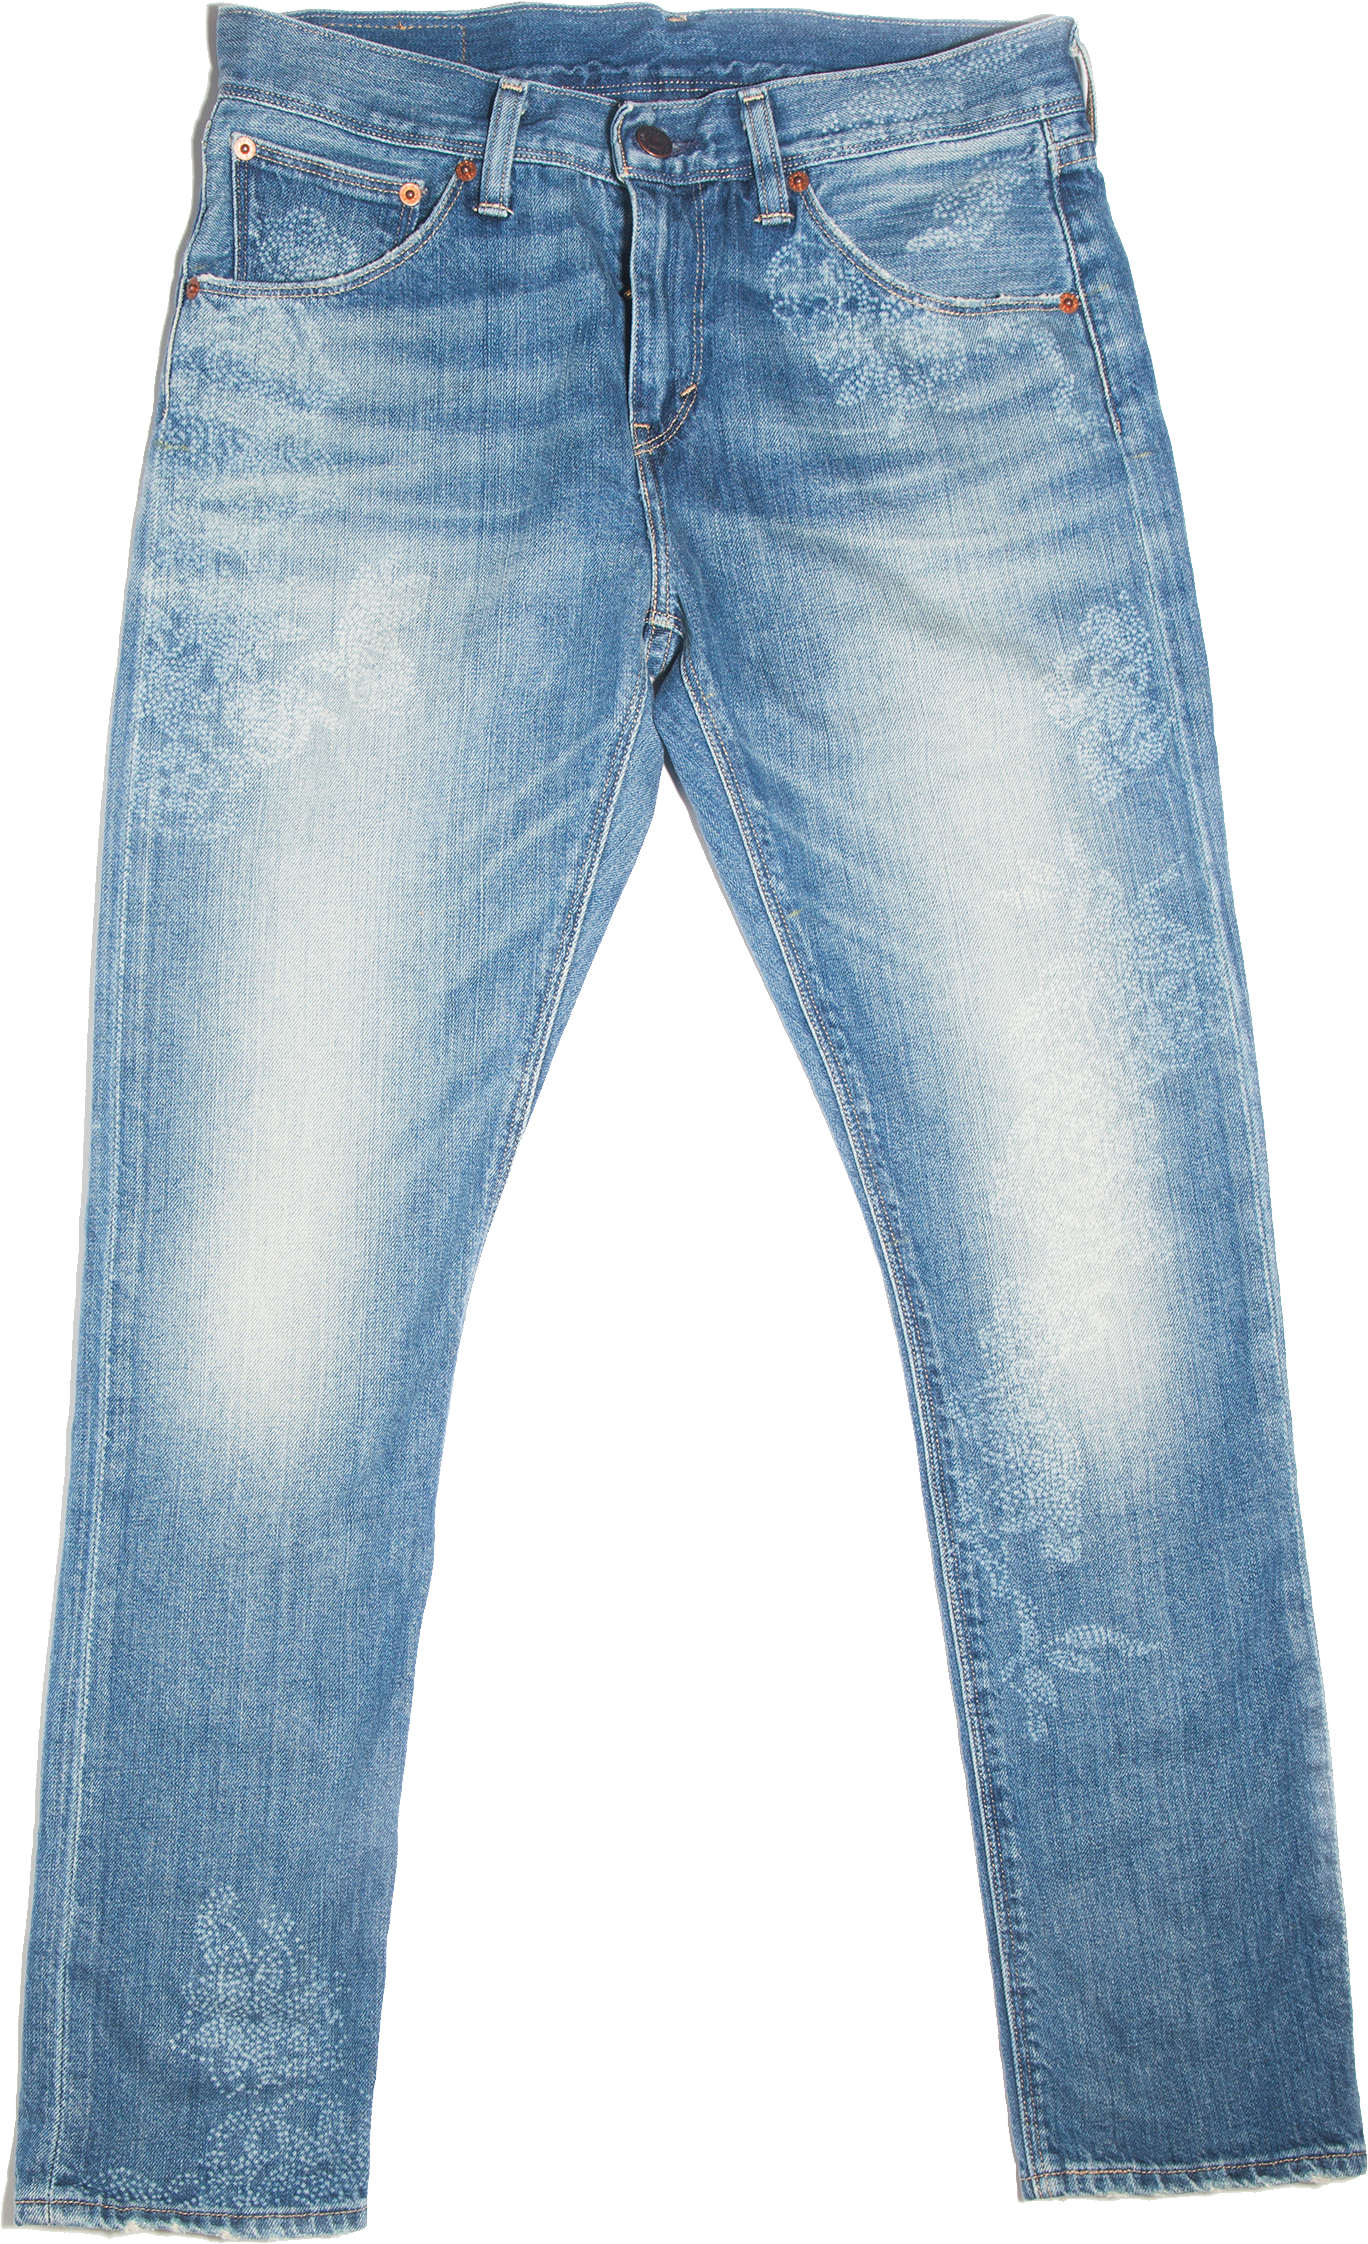 clipart jeans 